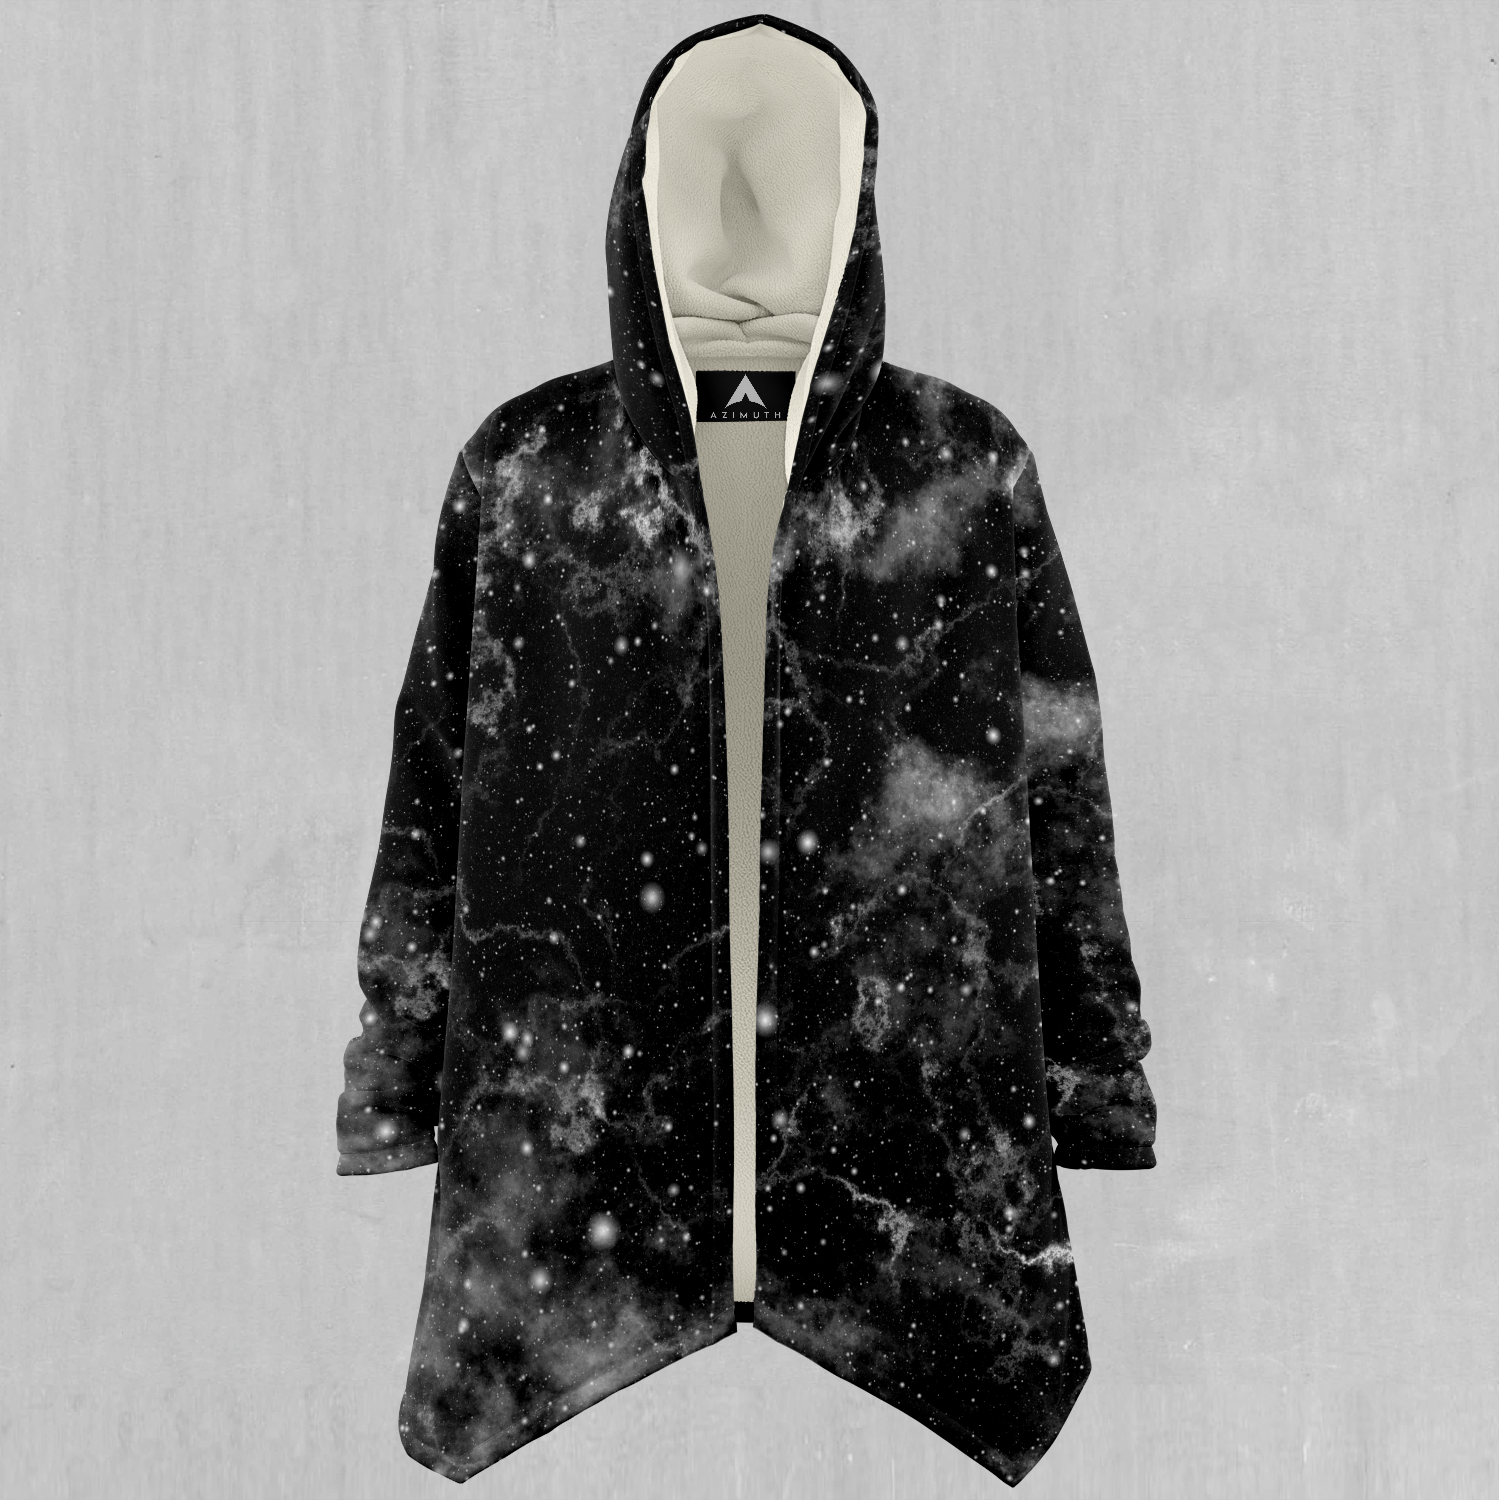 dark matter clothing